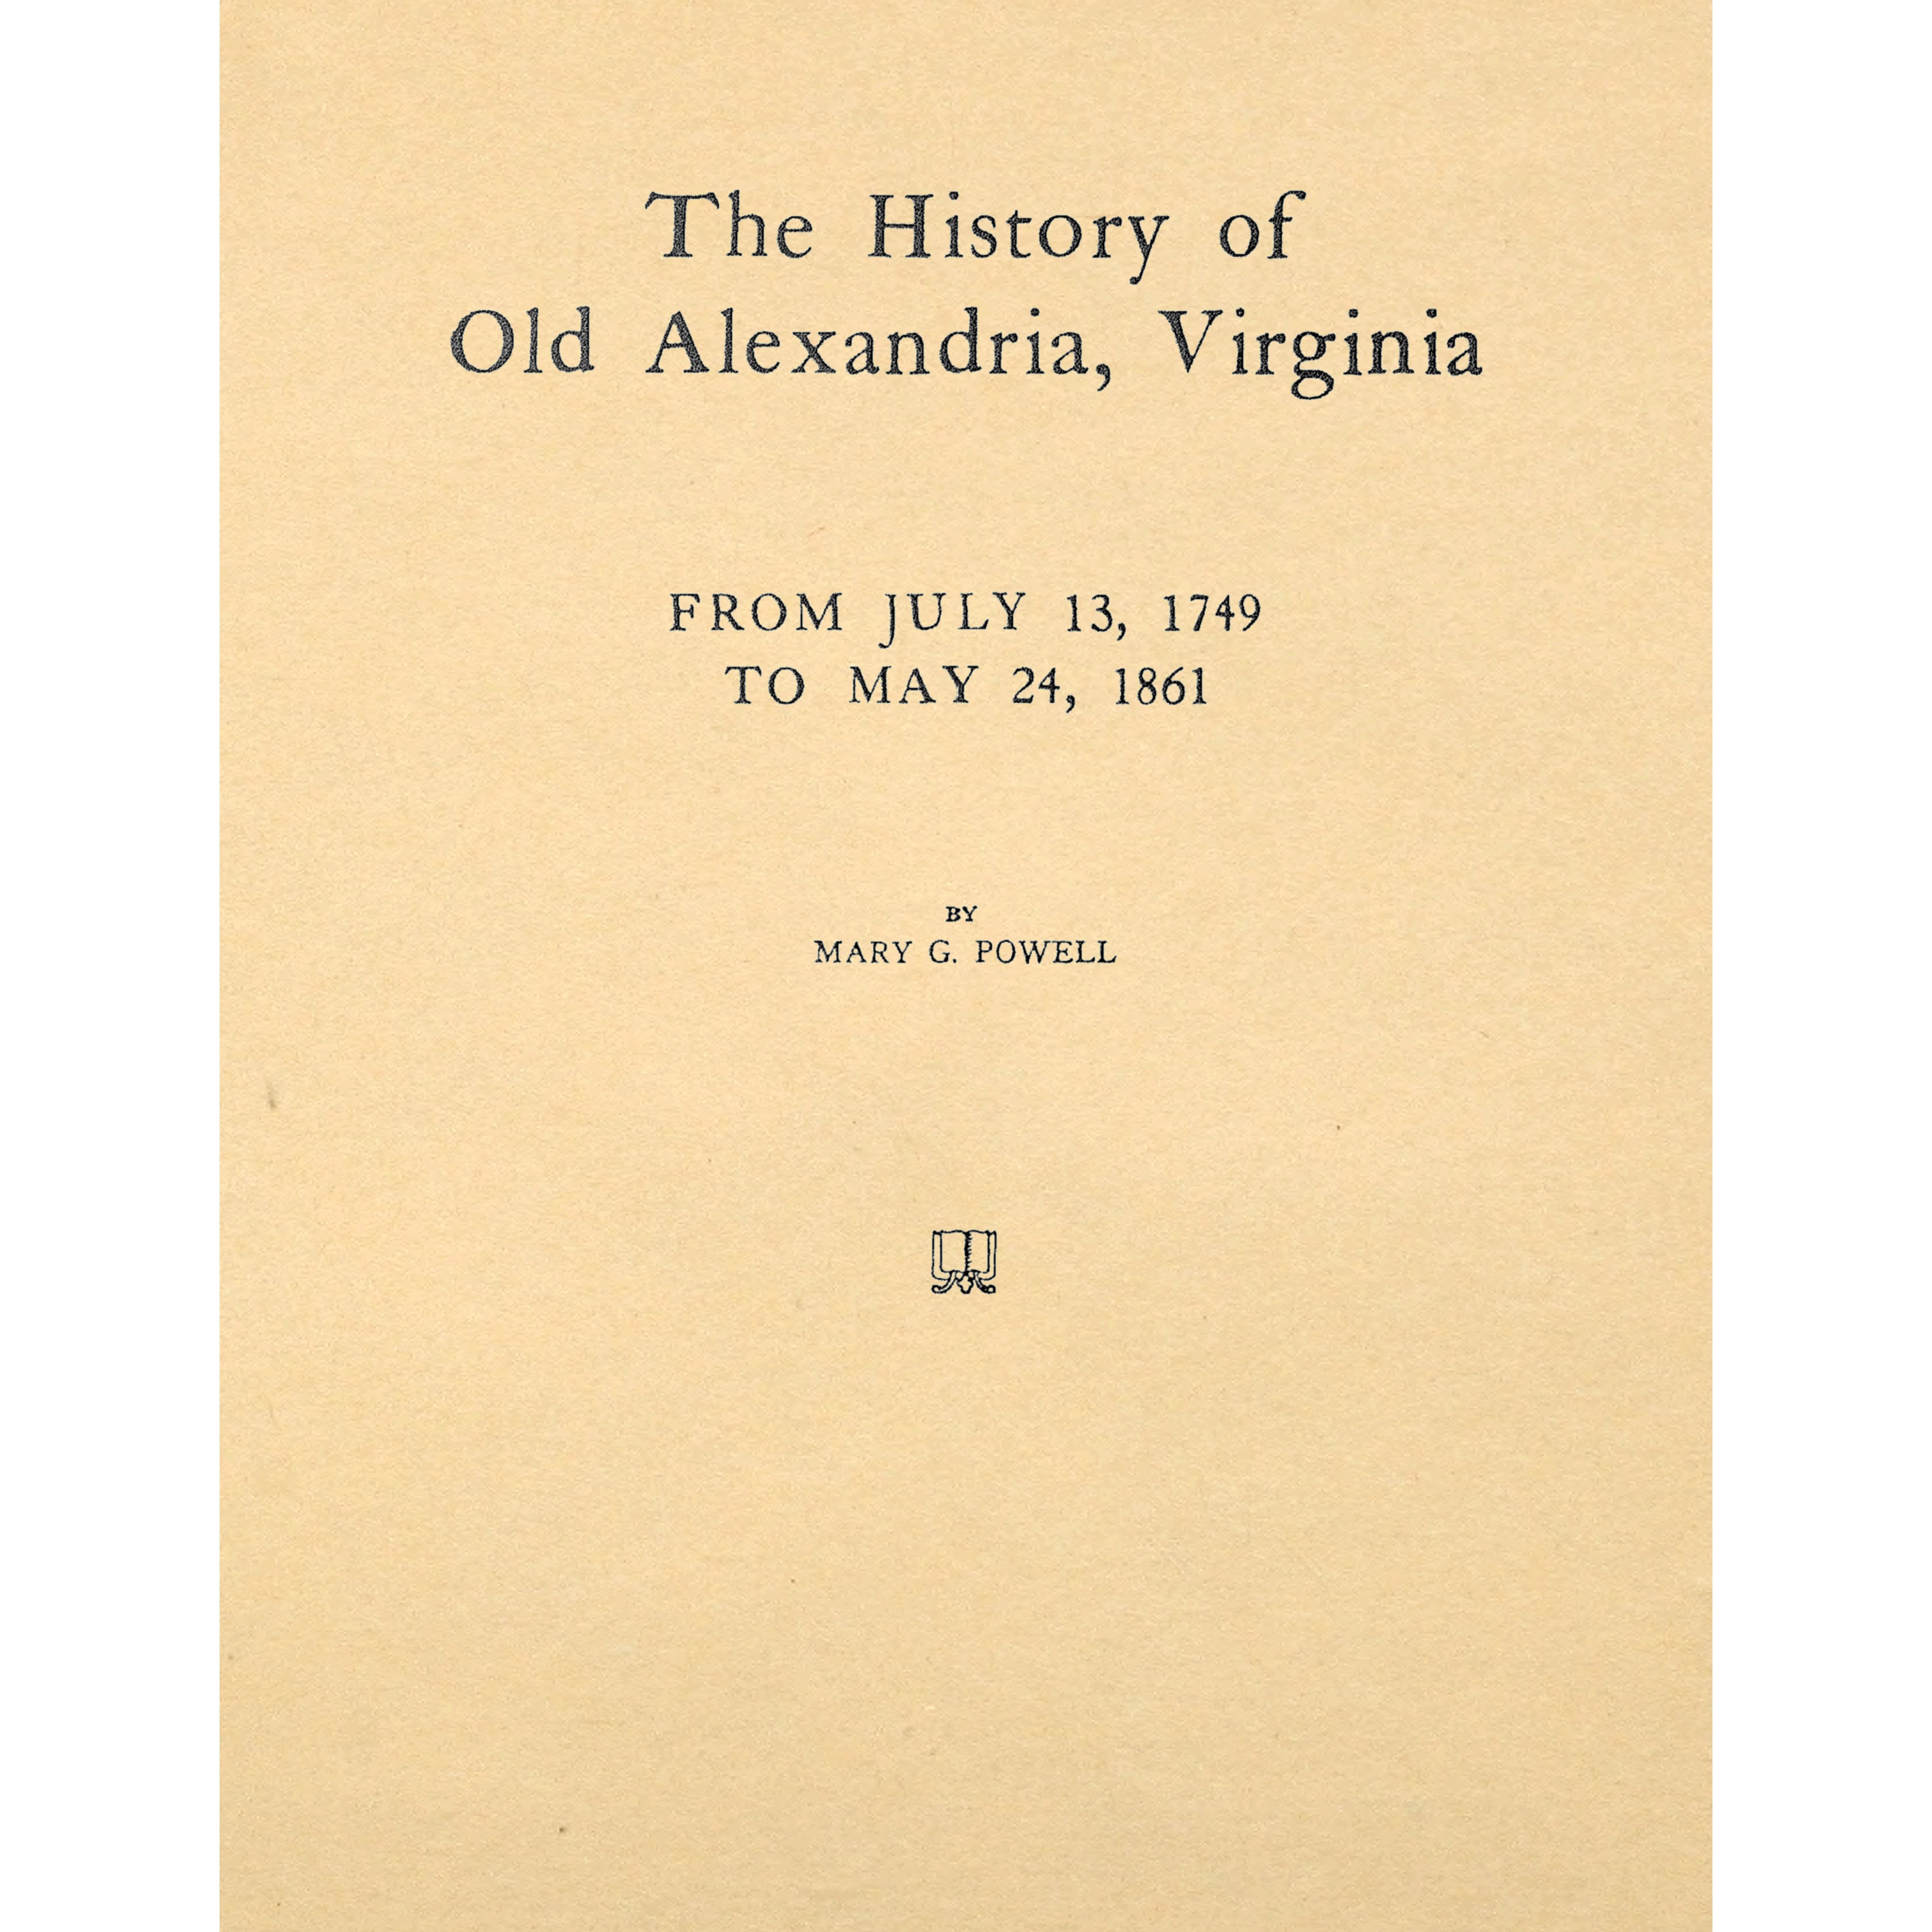 The History of Old Alexandira, Virginia;